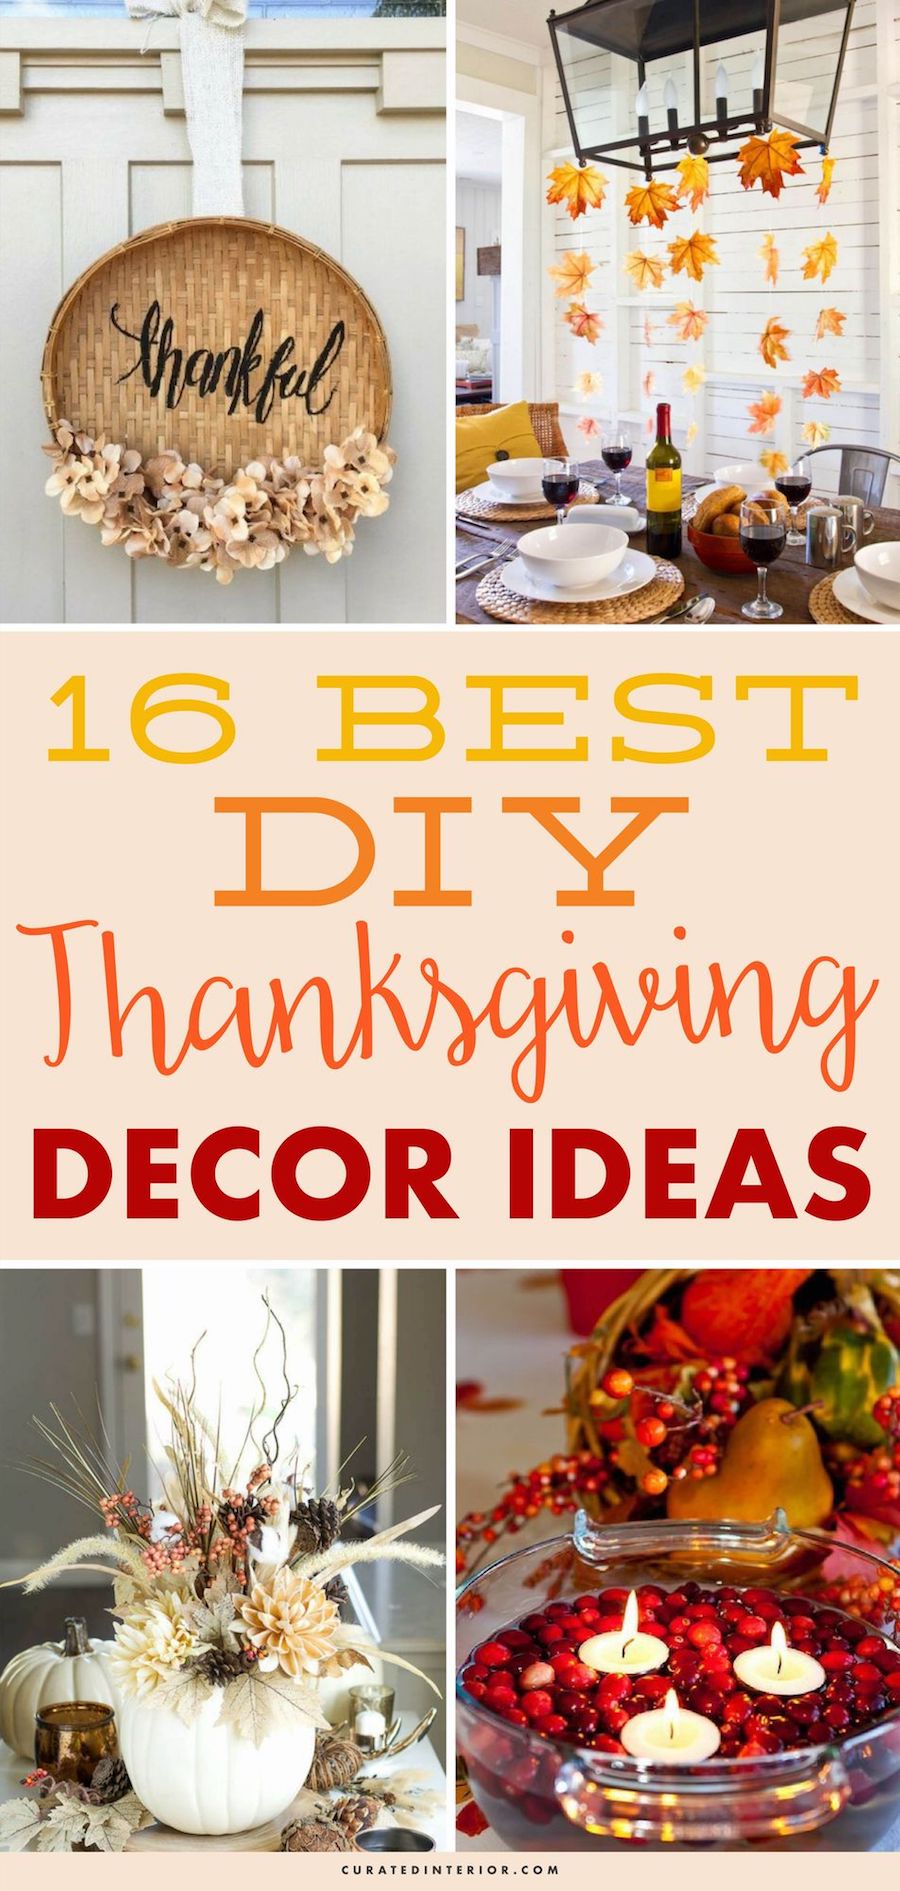 16 BEST DIY Thanksgiving Decor Ideas #Thanksgiving #ThanksgivingDecor #ThanksgivingDIY #DIY